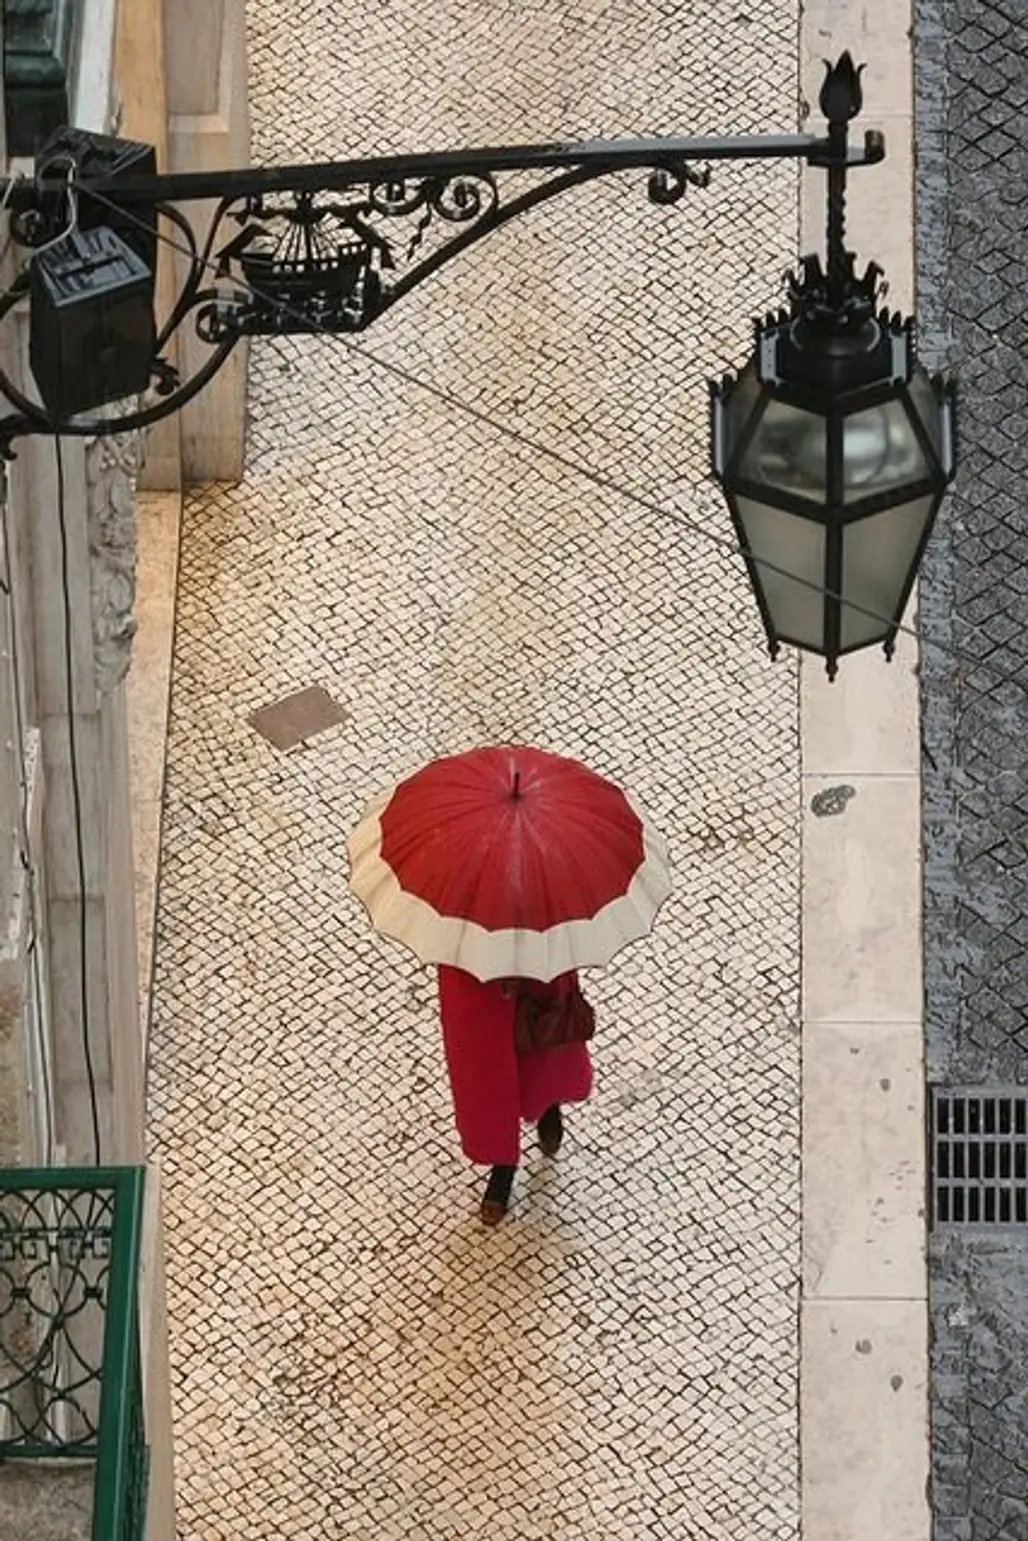 Rainy Day in Lisbon